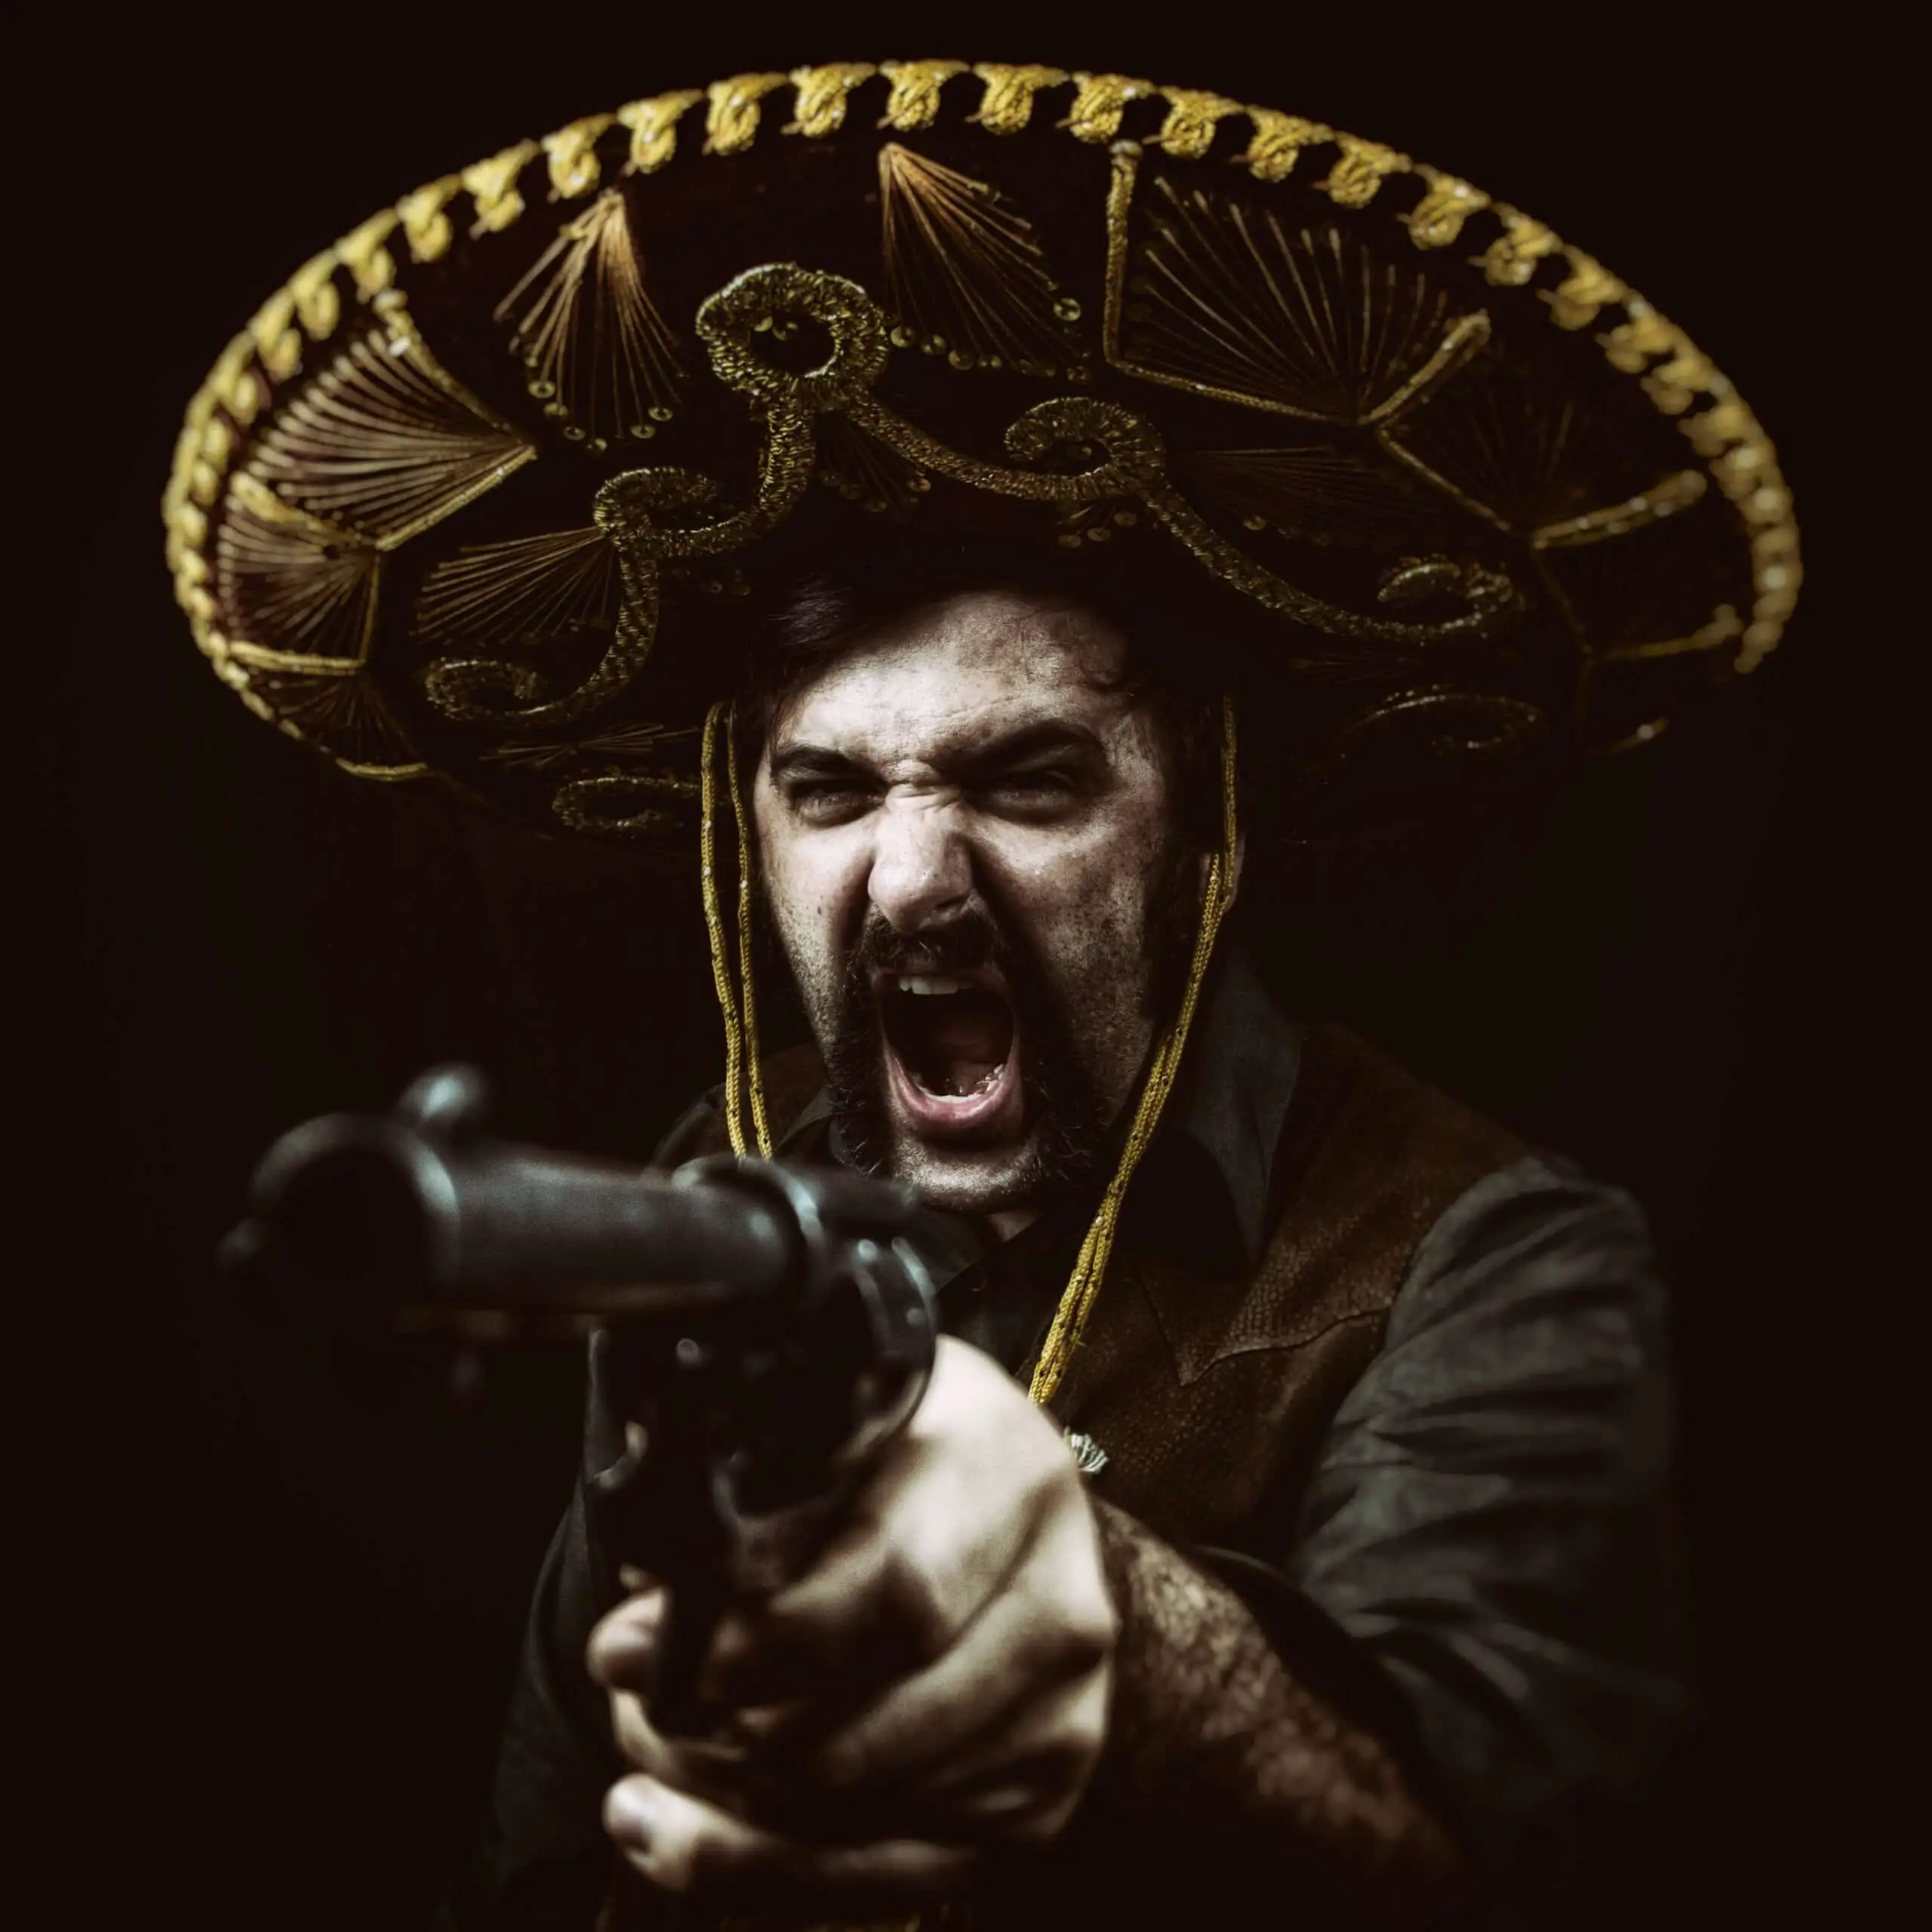 Mexican Bandito